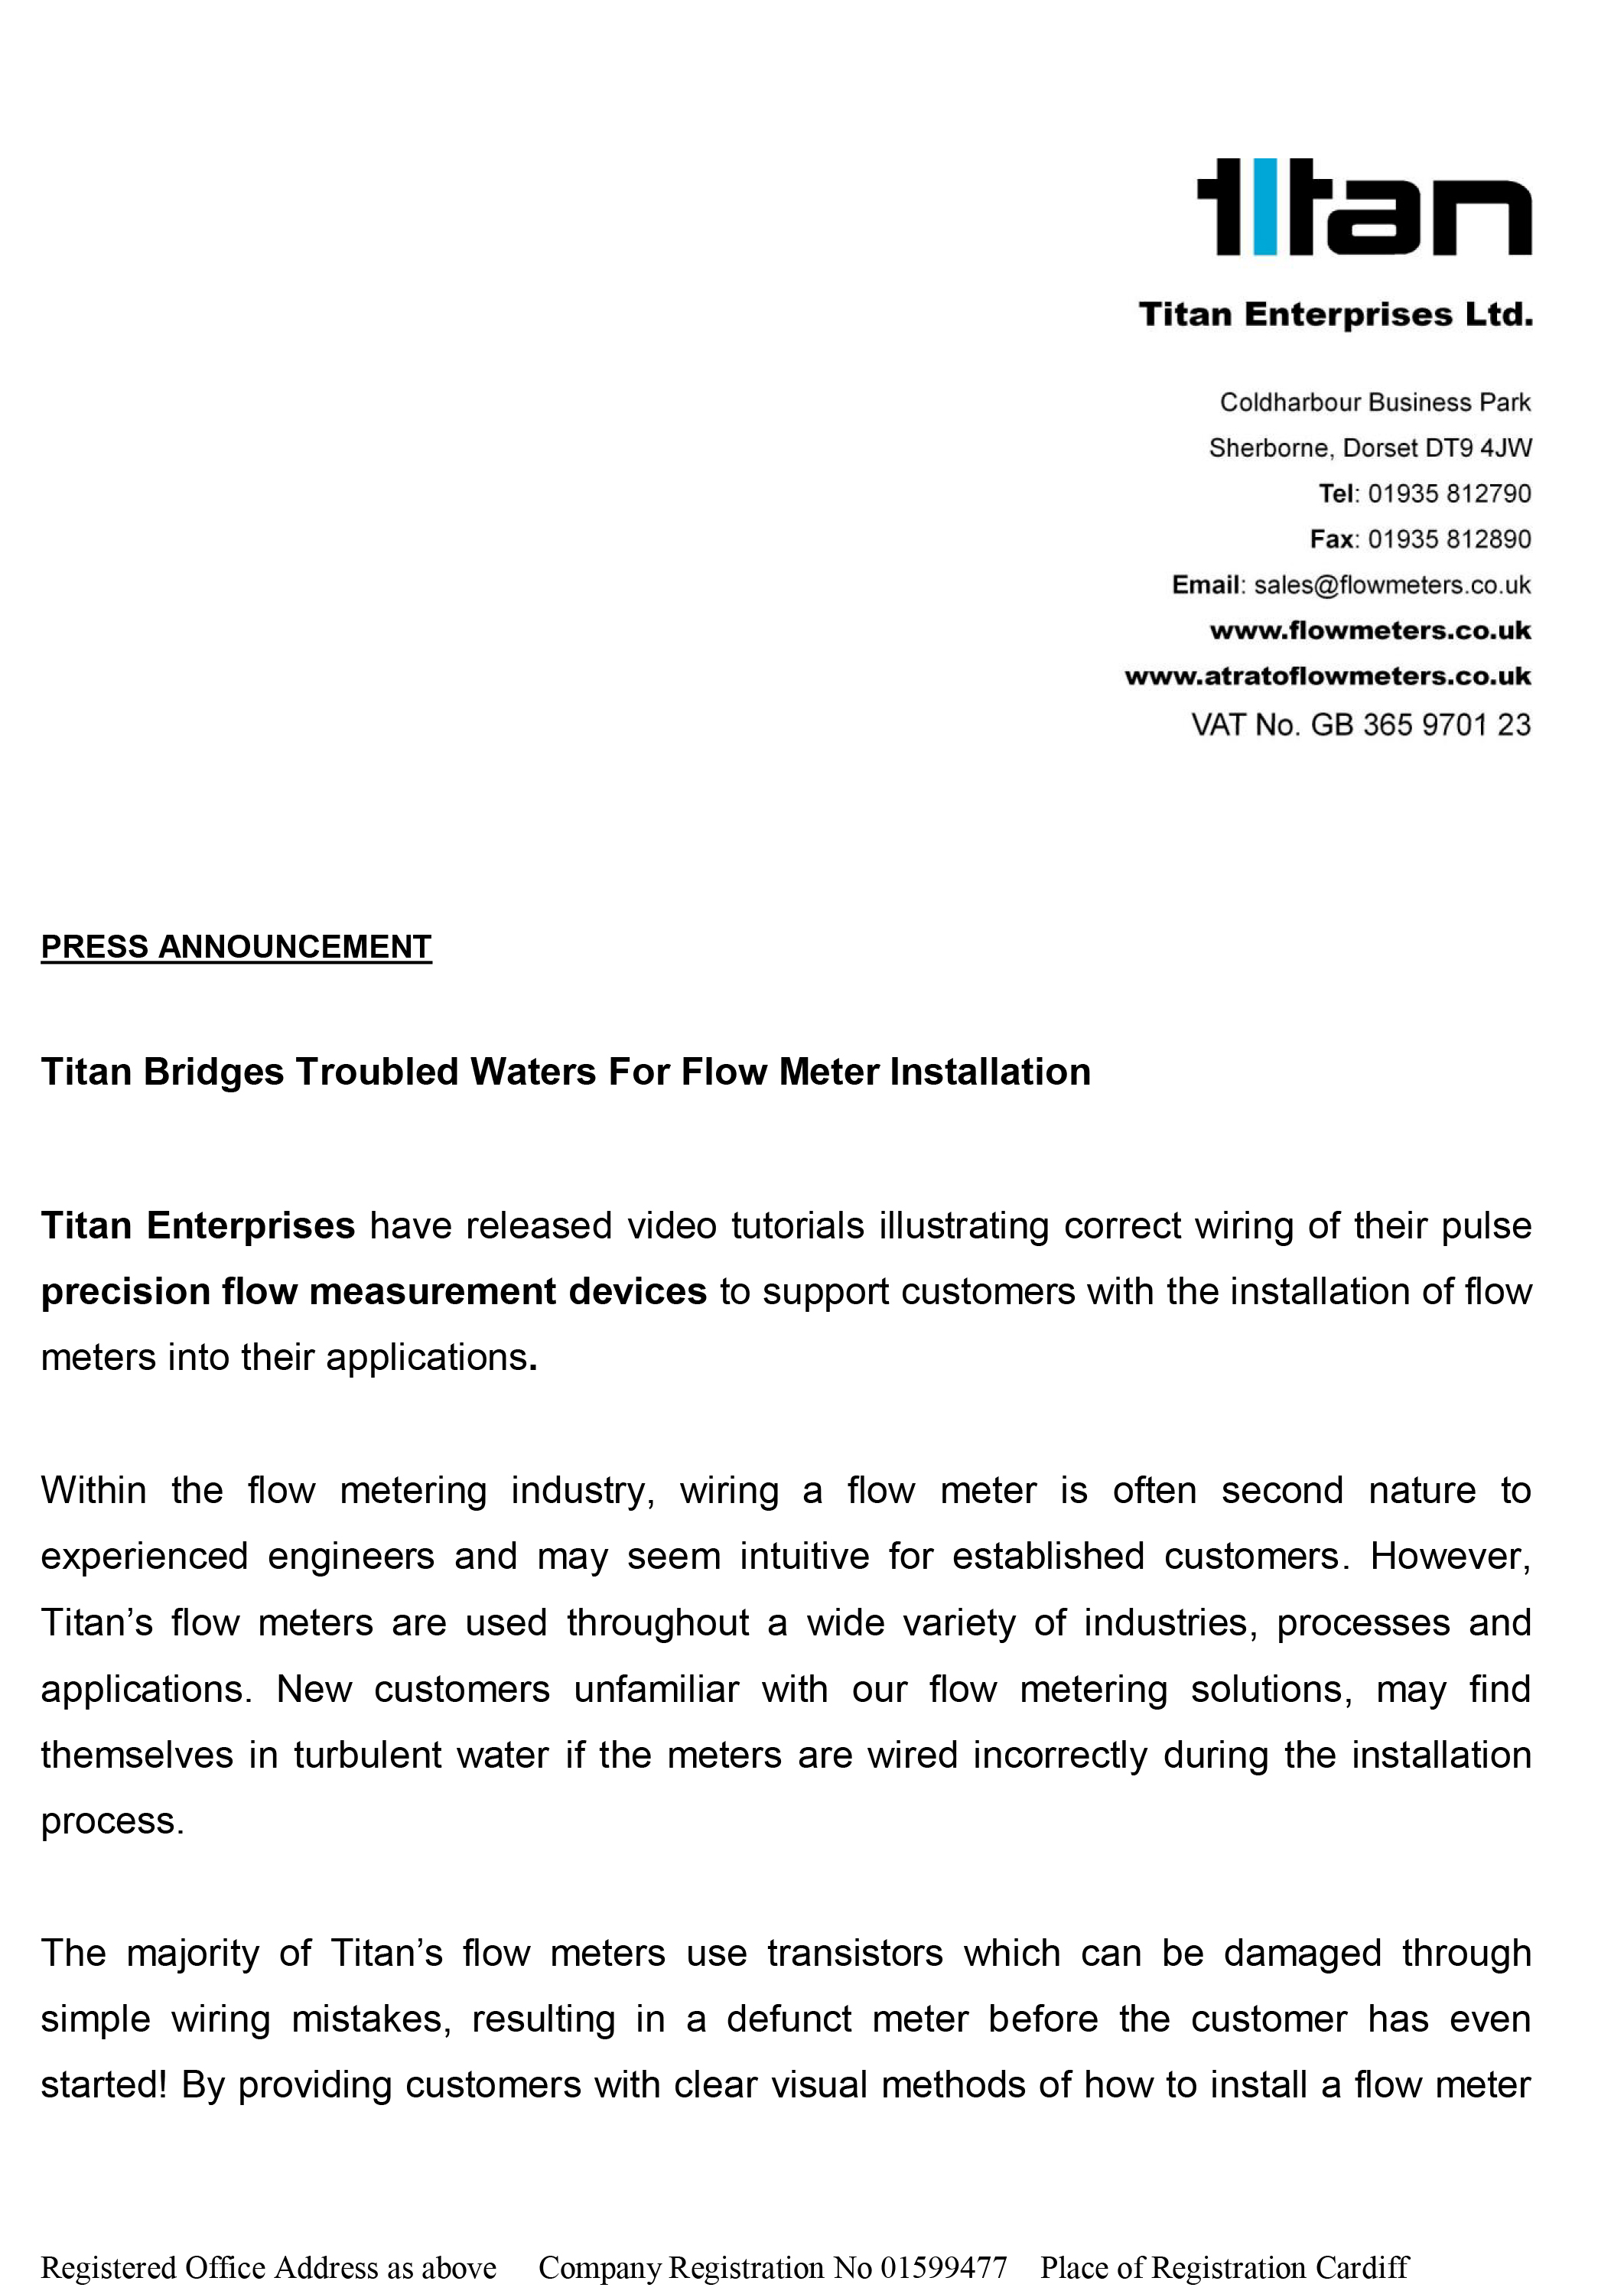 Titan Bridges Troubled Waters For Flow Meter Installation